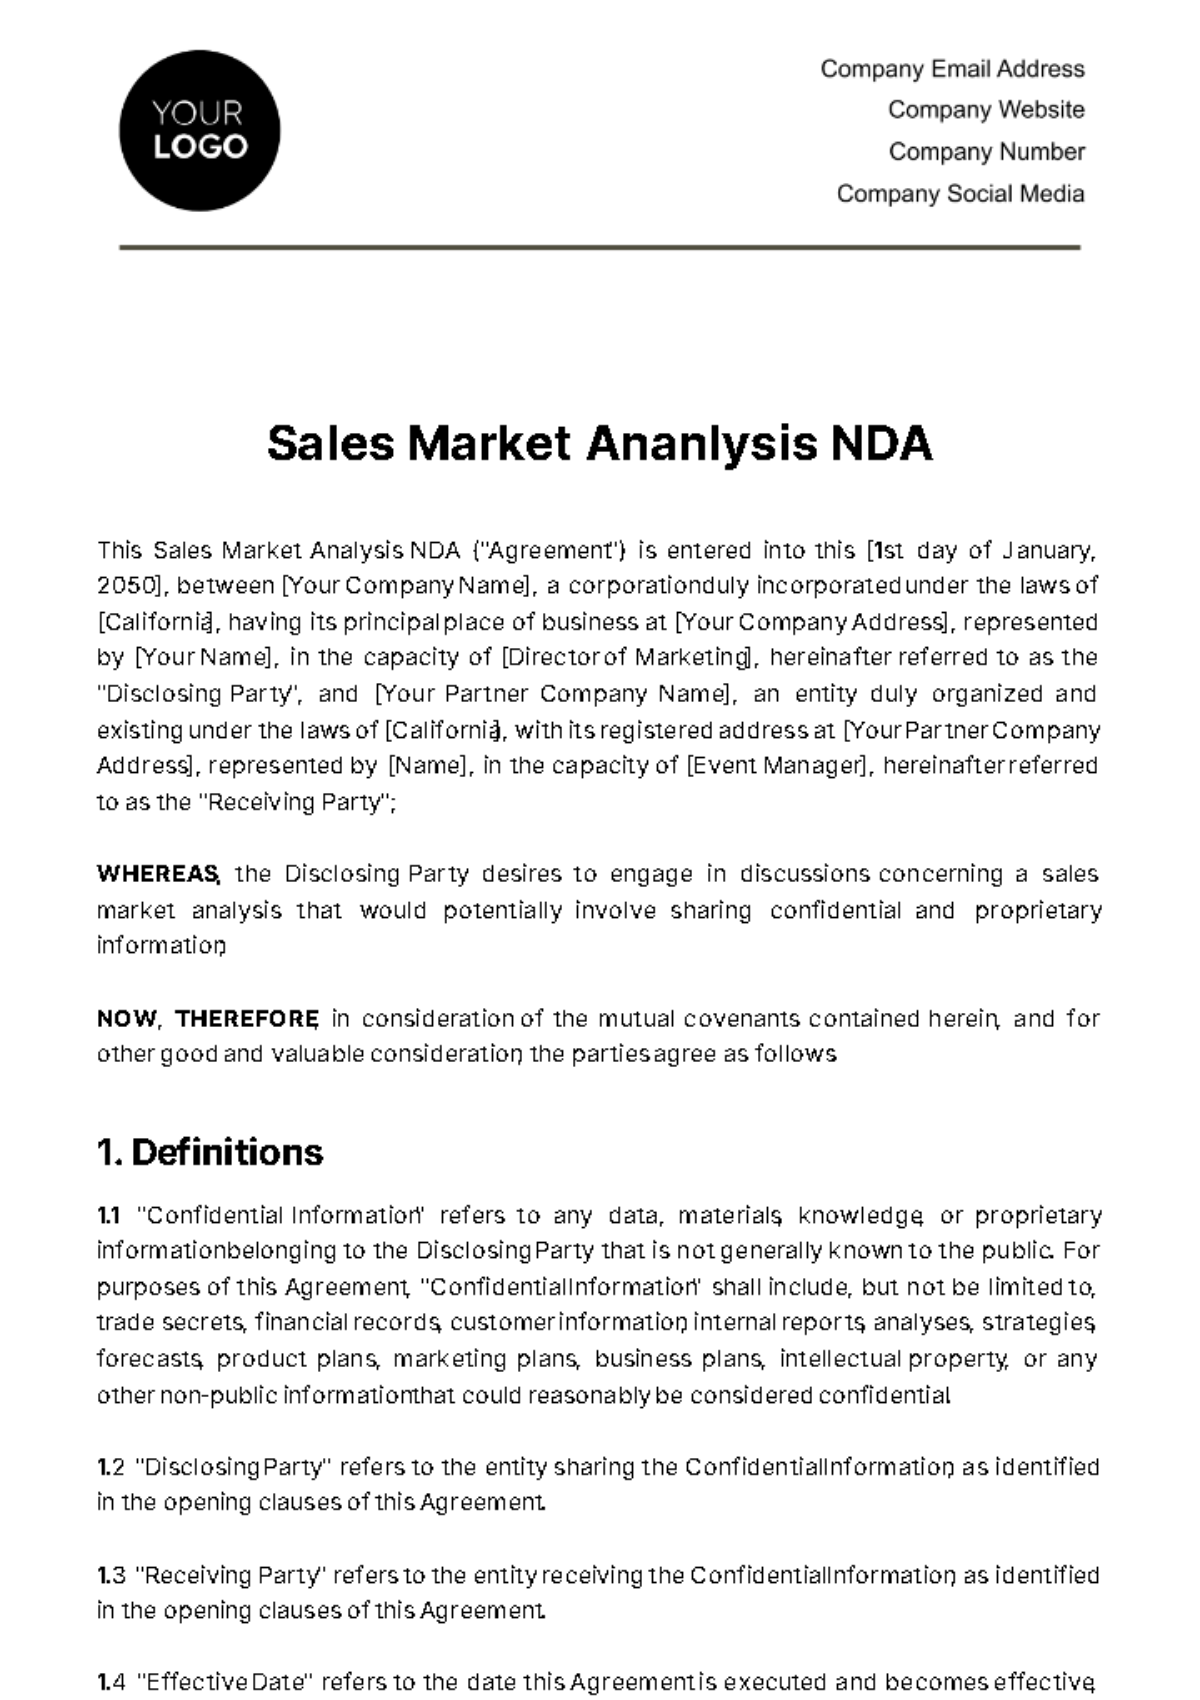 Free Sales Market Analysis NDA Template